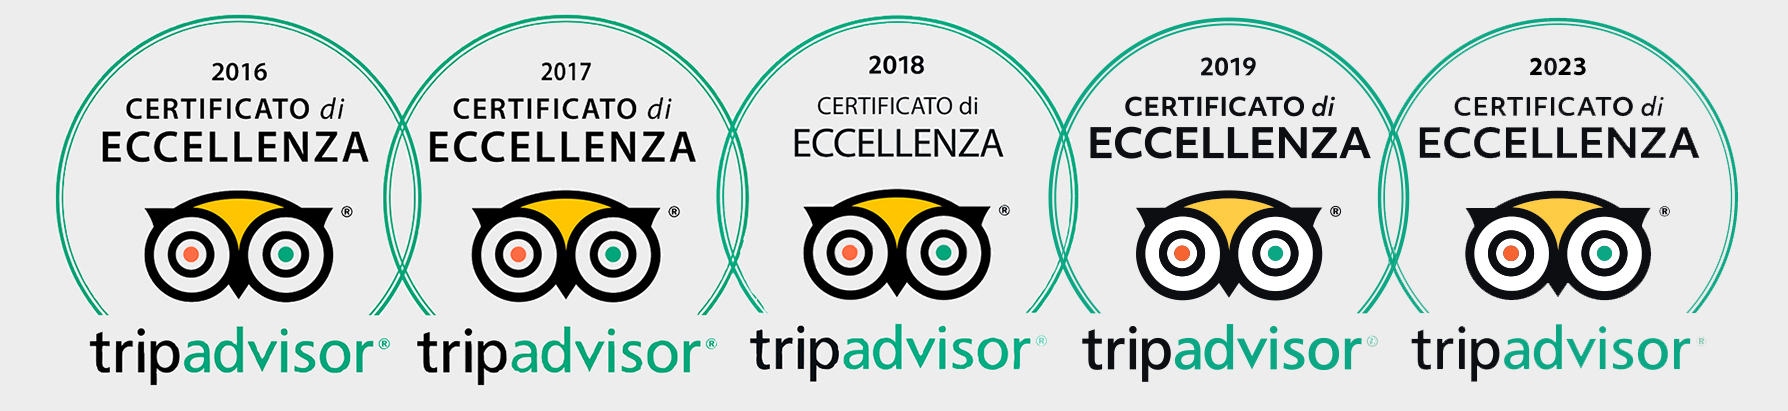 Hotel degli Aranci Tripadvisor top award